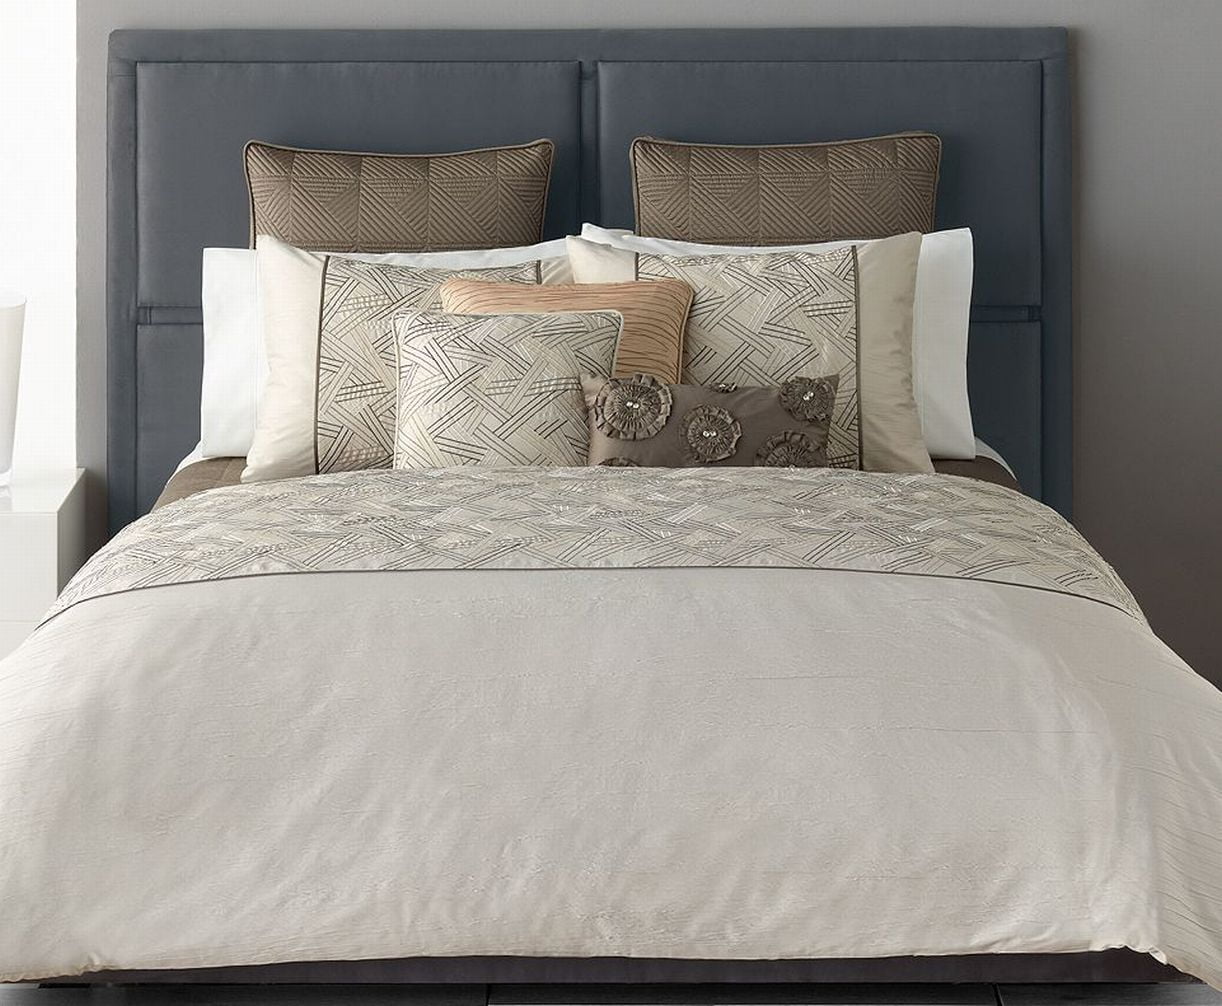 Simply Vera Wang Infinity Queen Bed Comforter Set with Shams & Bedskirt ...